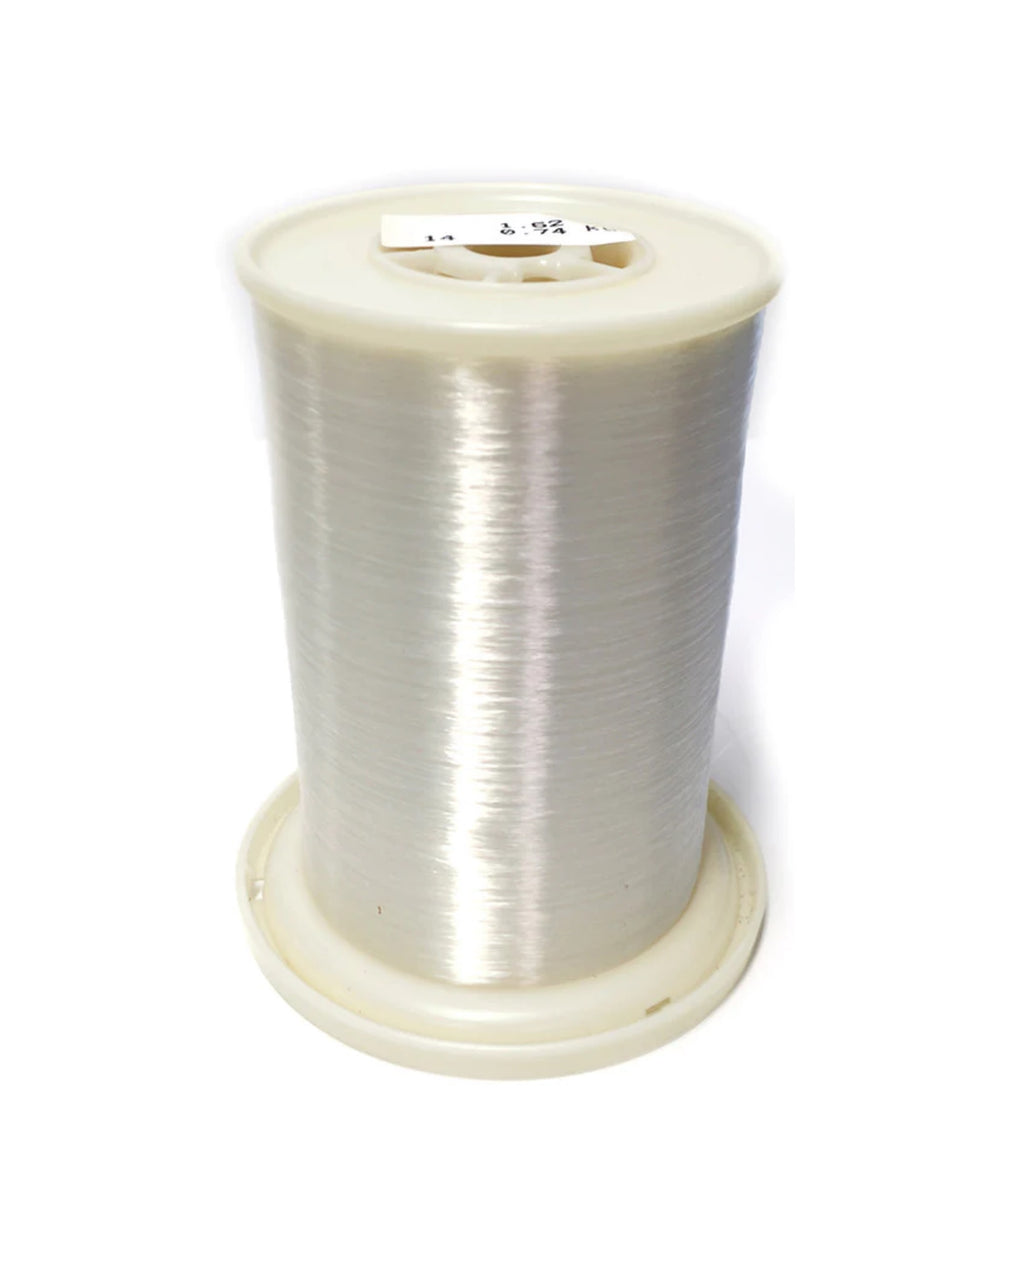 Bra Sewing Thread, White, Gütermann Mara 120 All Purpose Polyester Thread -  Tex 25 – 1,000 Meters, 1,093 Yds.